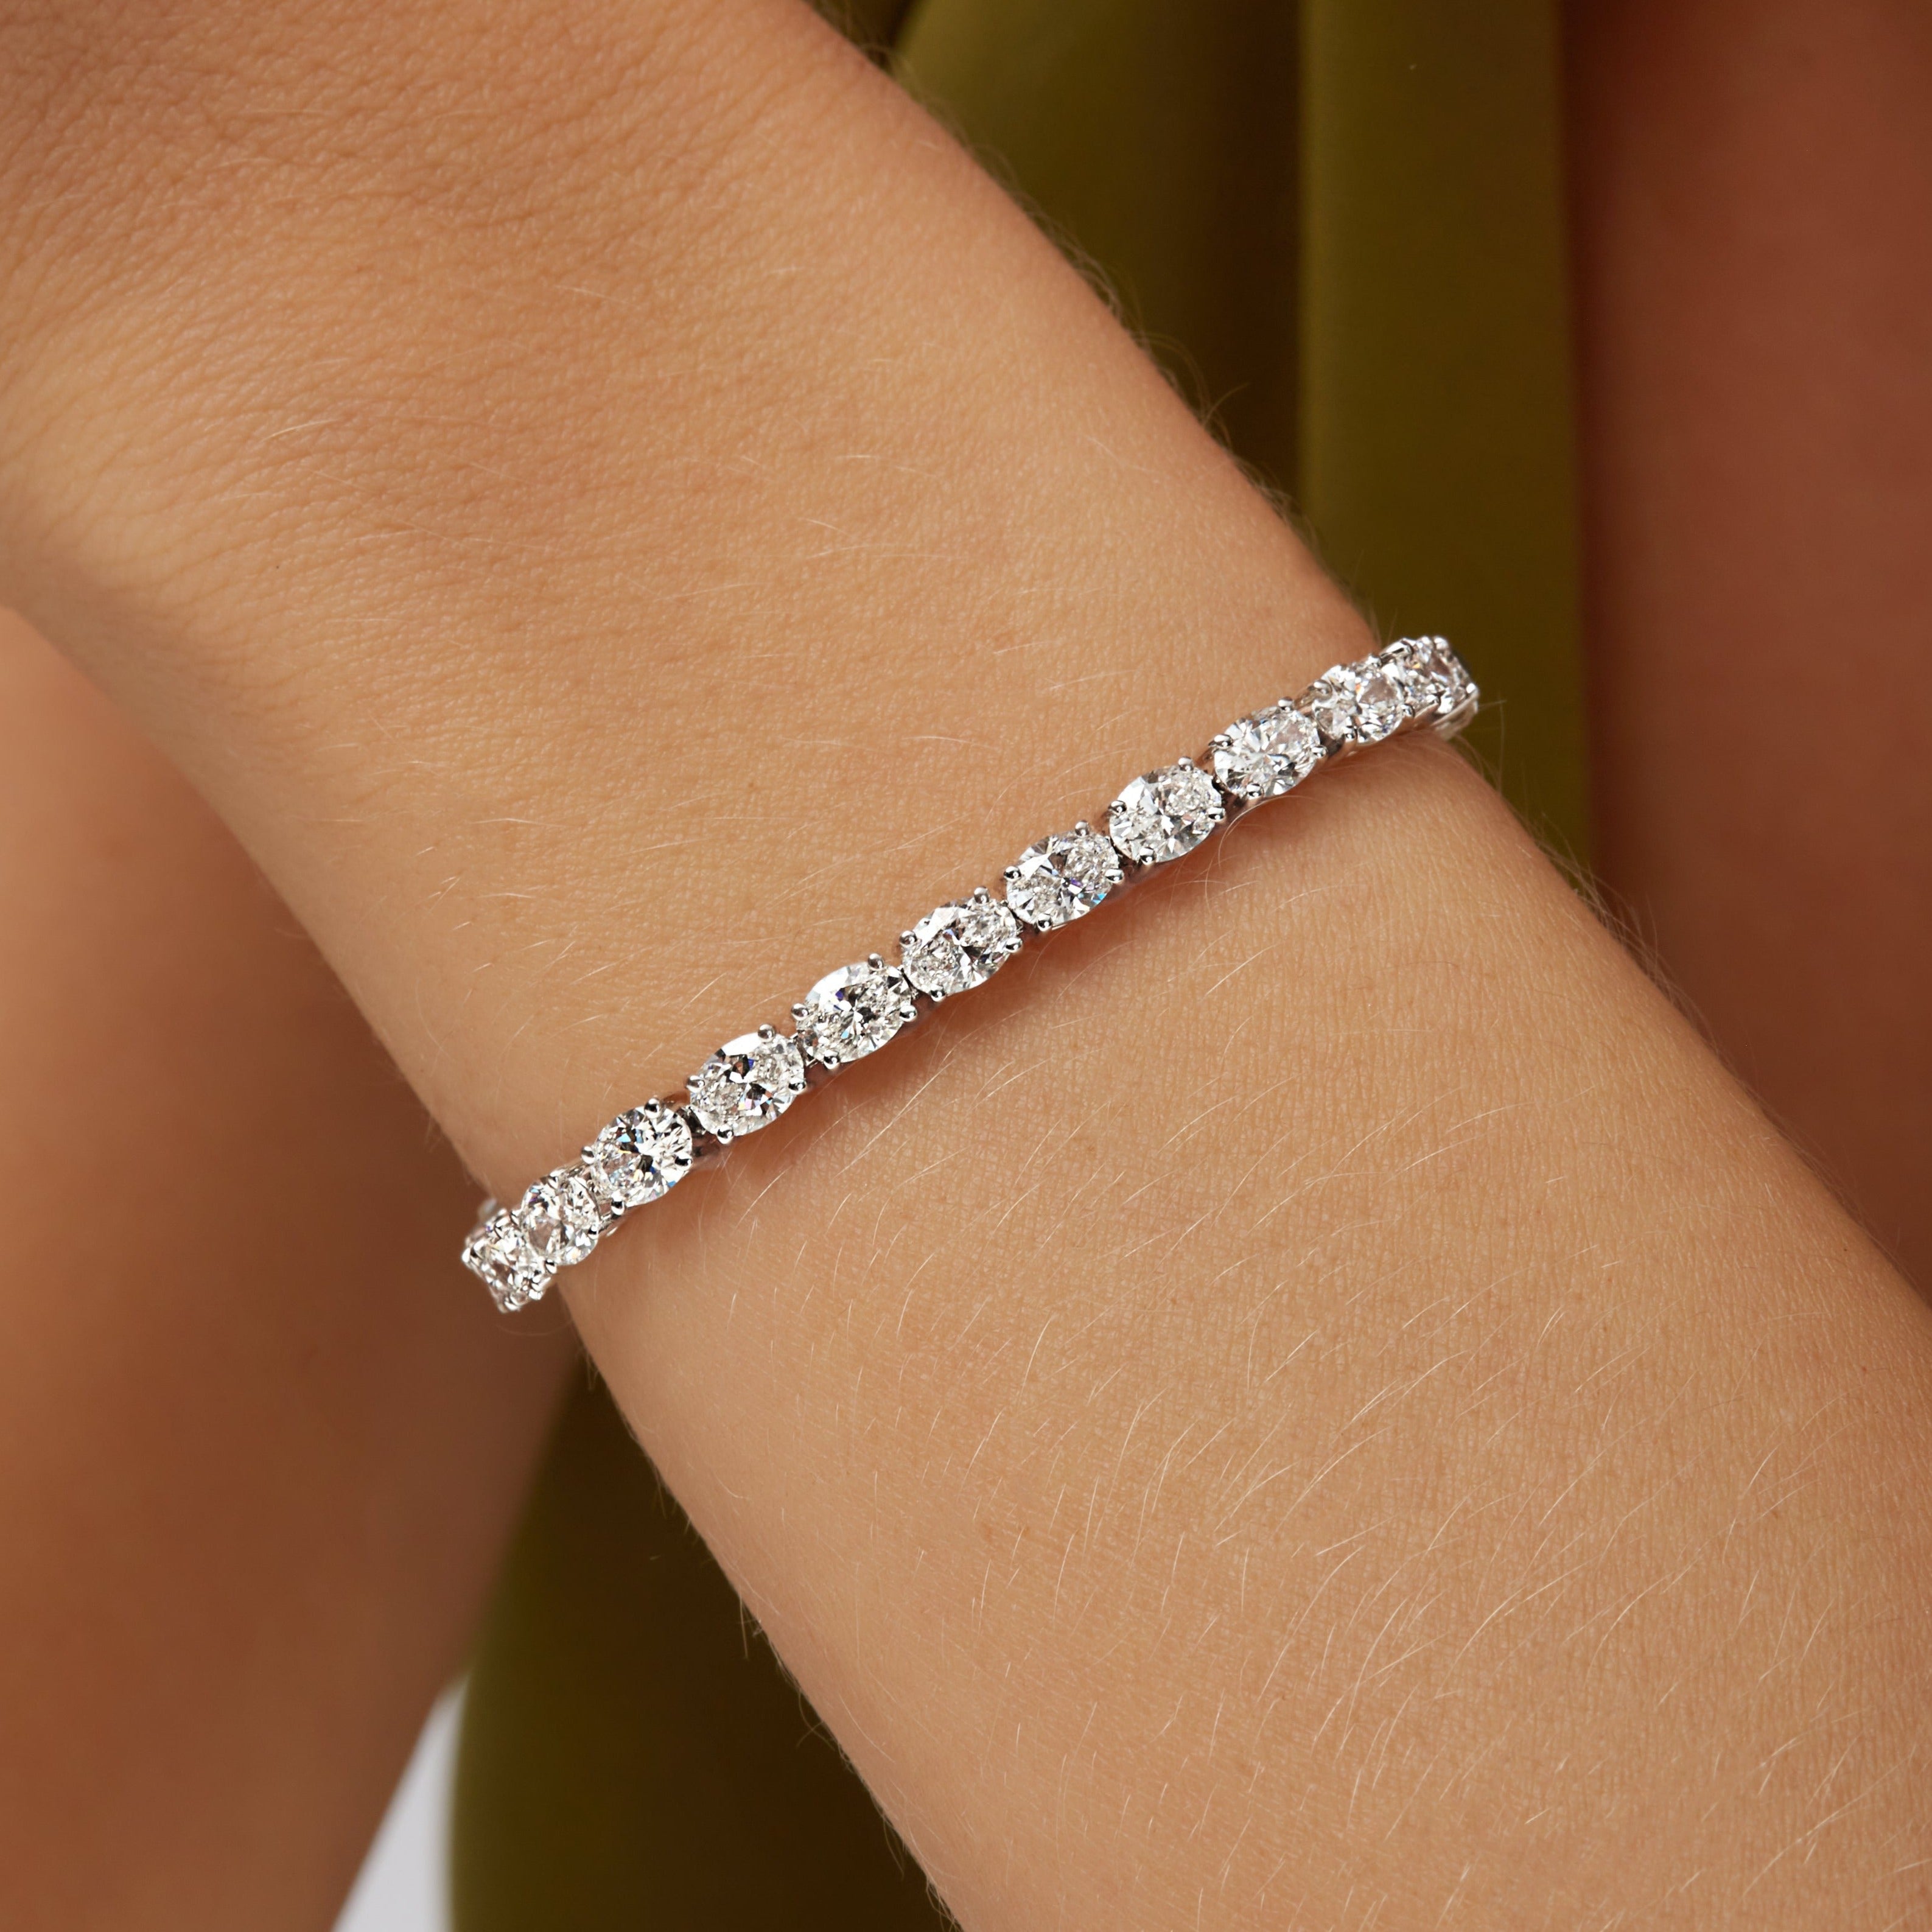 5.22cttw diamond tennis bracelet. G VS diamonds set in 14kt white gold 3  prong setting. | Sparkly jewelry, Tennis bracelet diamond, Diamond bangle